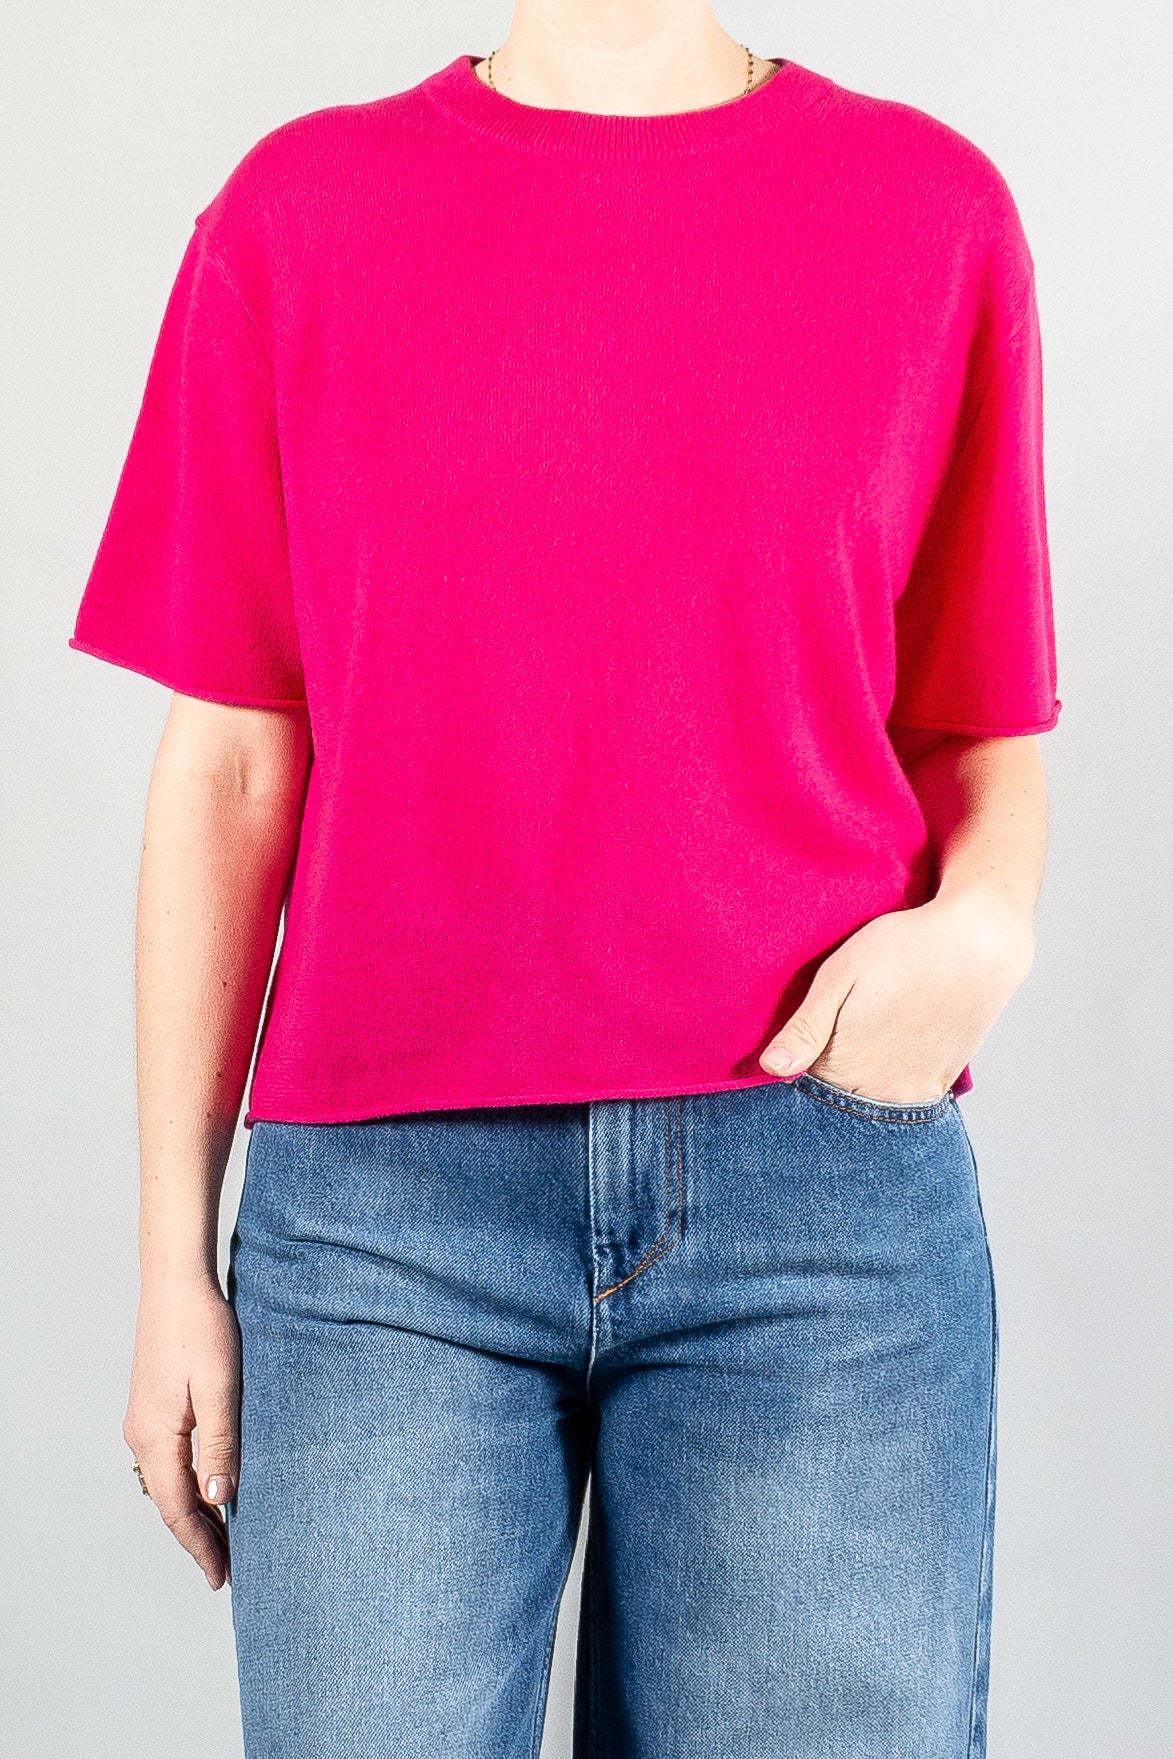 Lisa Yang Cila T-Shirt